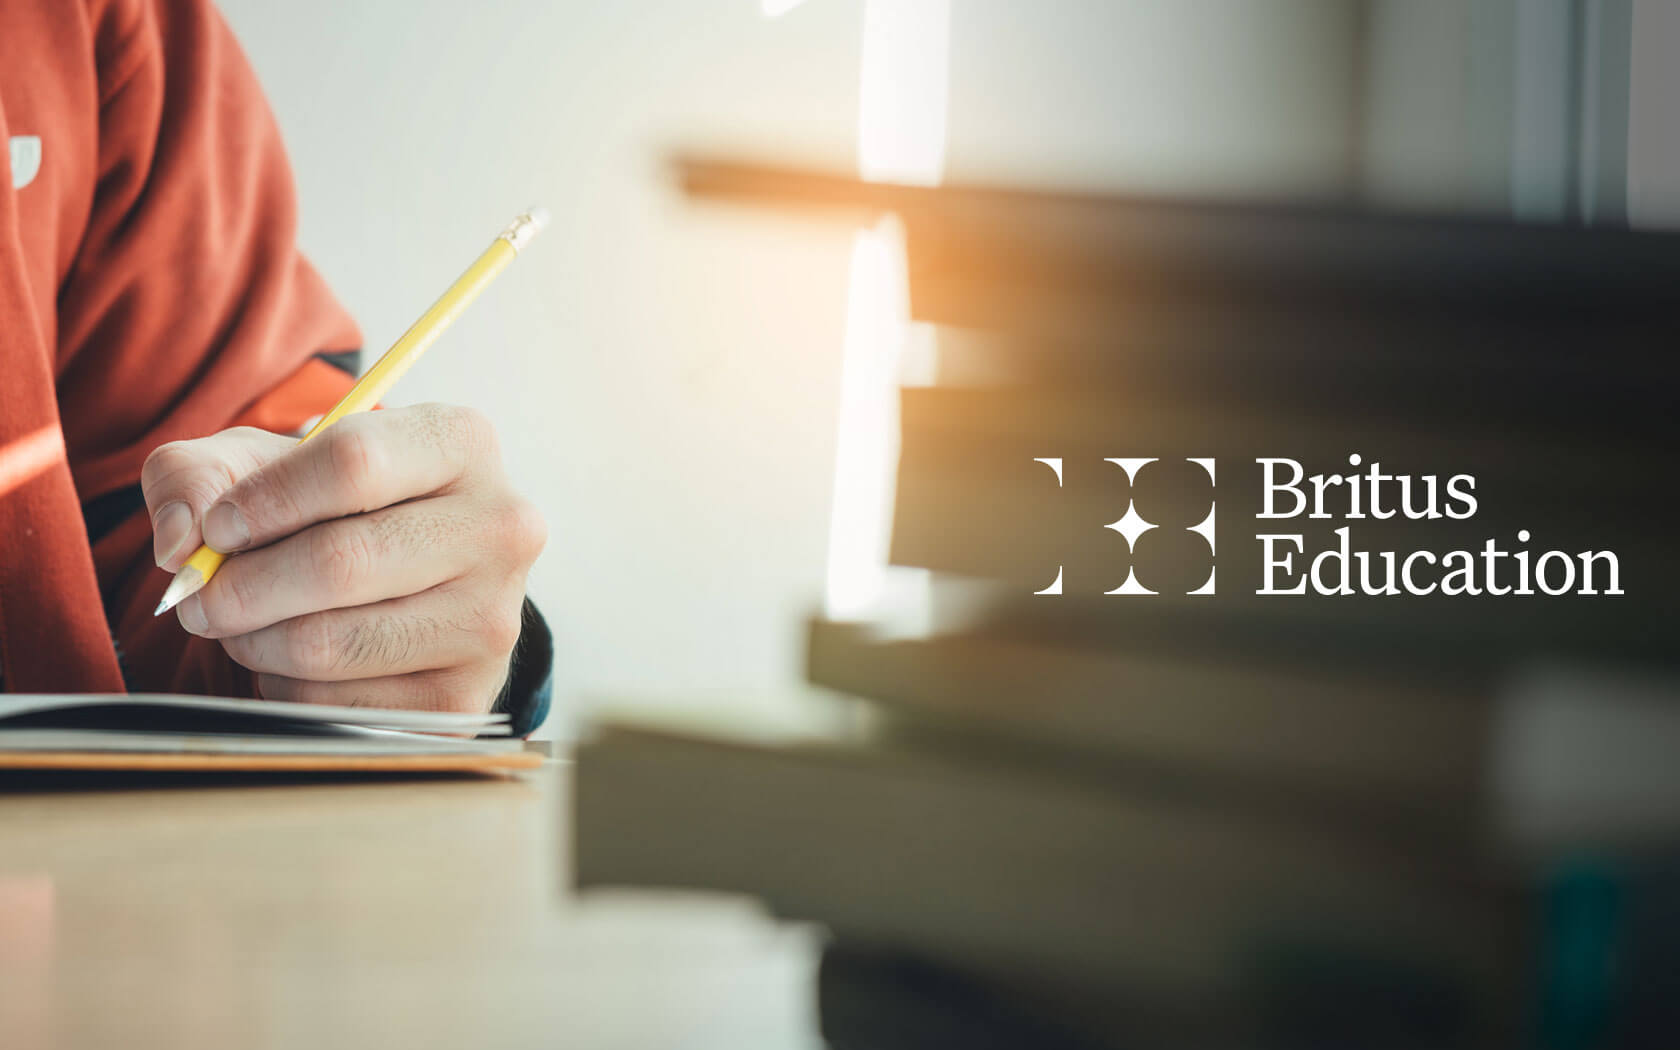 Britus Education. Brand logo in white